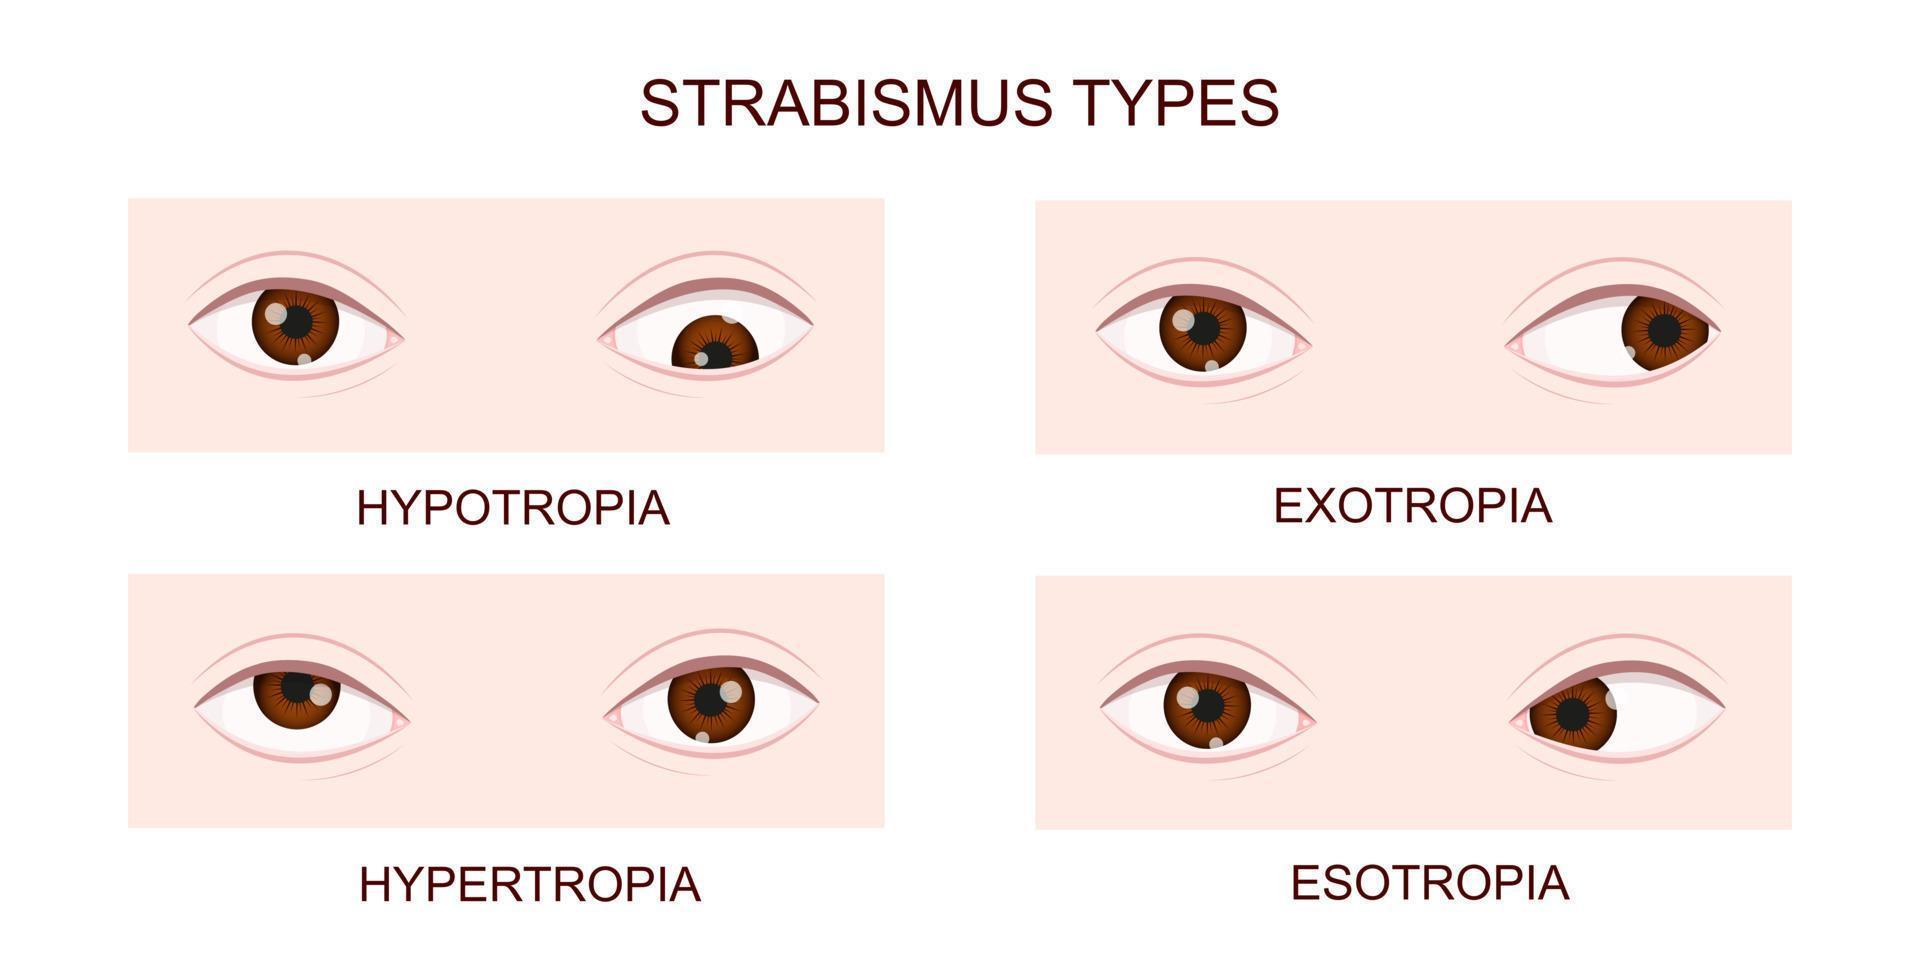 Strabismus types. Hypotropia, hypertropia, exotropia, esotropia. Human eyes with different squint disorders. Crossed eyes condition vector